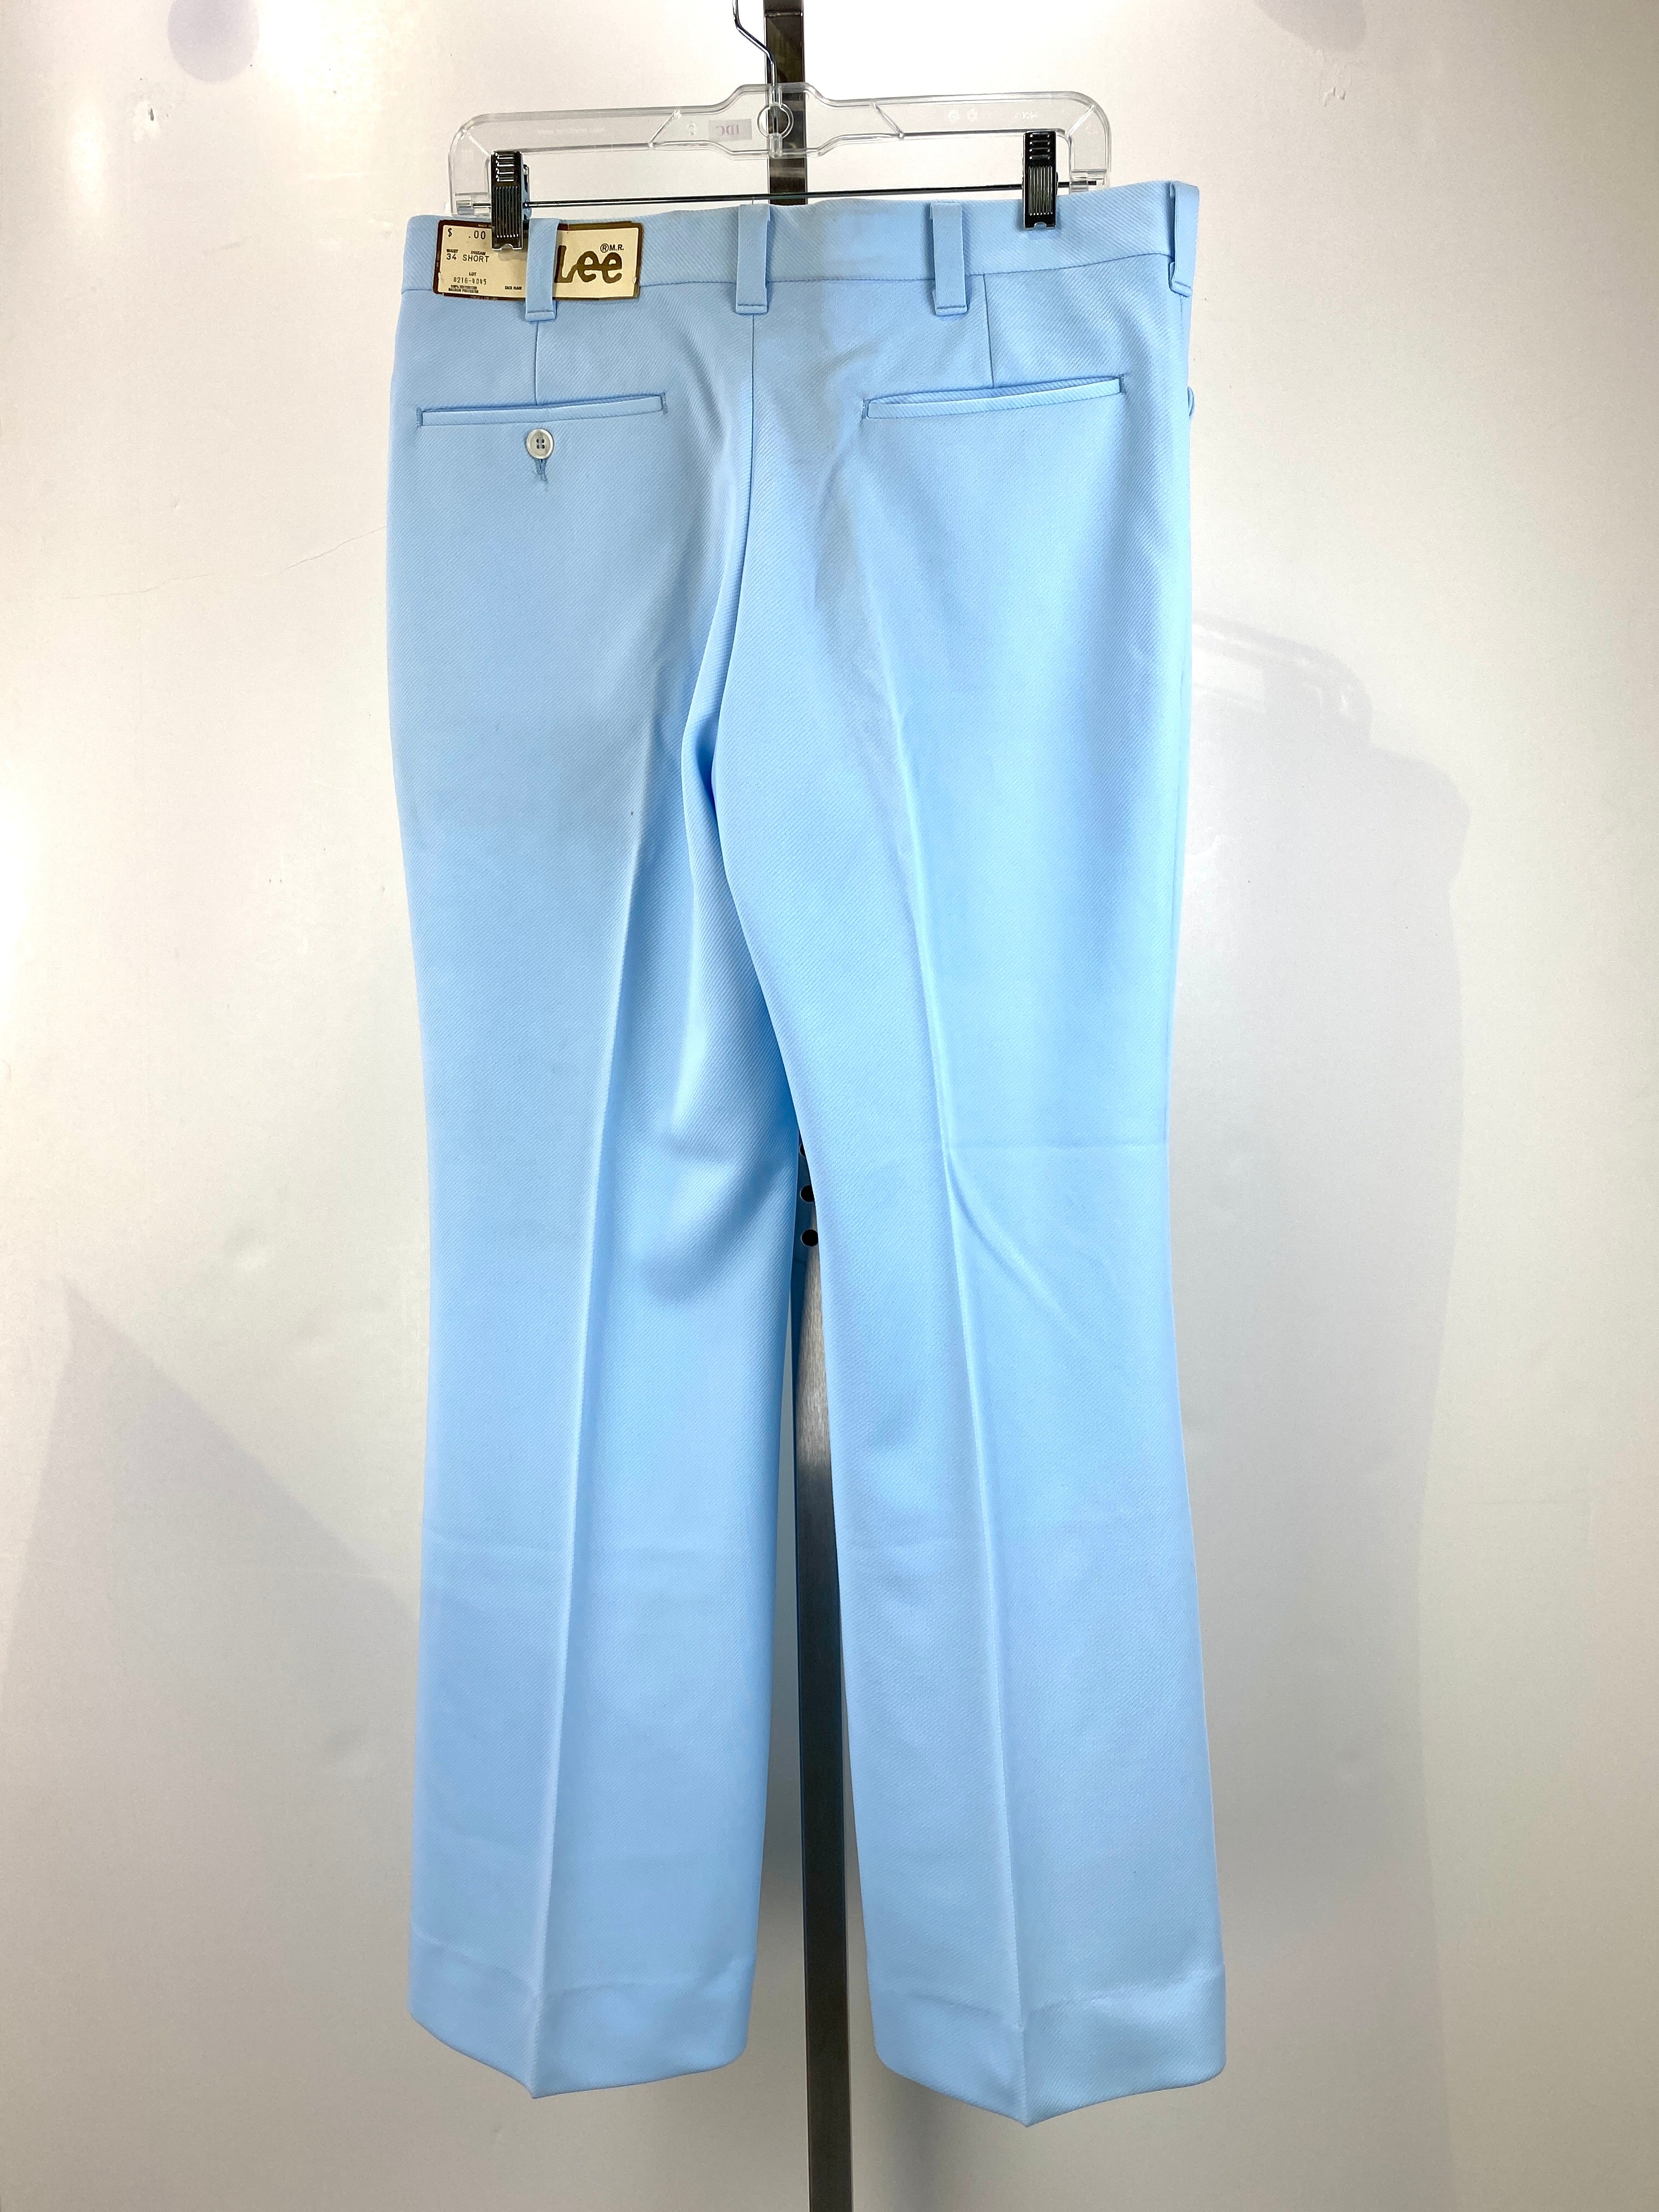 Mens 70's Jean Jacket and Flared Pants | 70s fashion men, Retro fashion, 70s  mens fashion